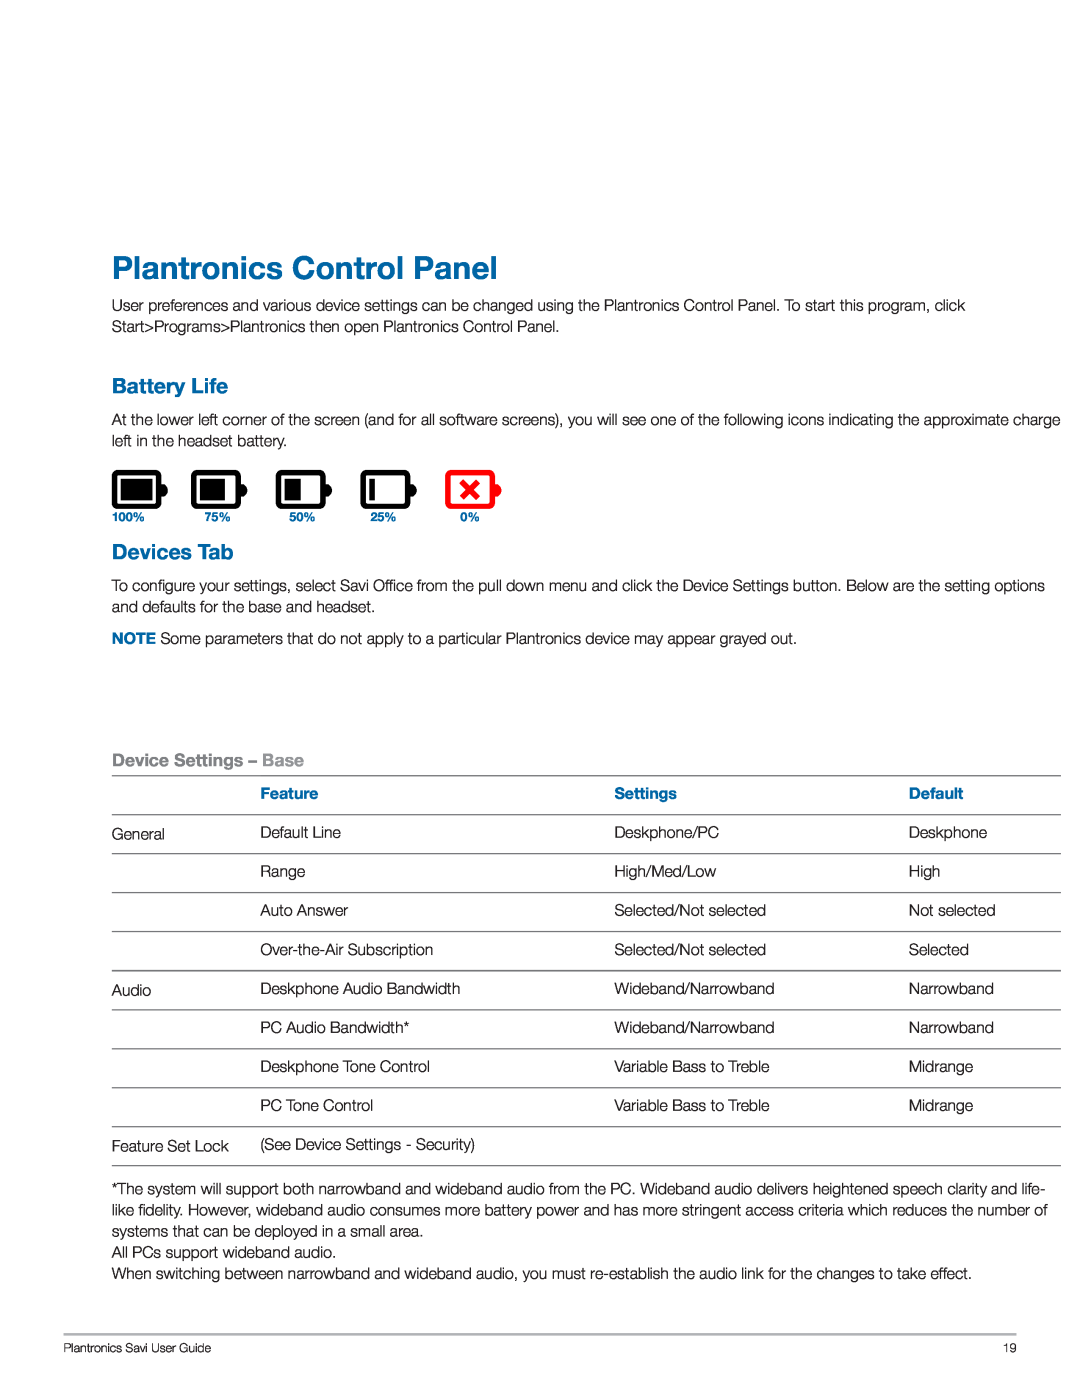 Plantronics WO100 manual Battery Life, Devices Tab, Device Settings - Base, Plantronics Control Panel 